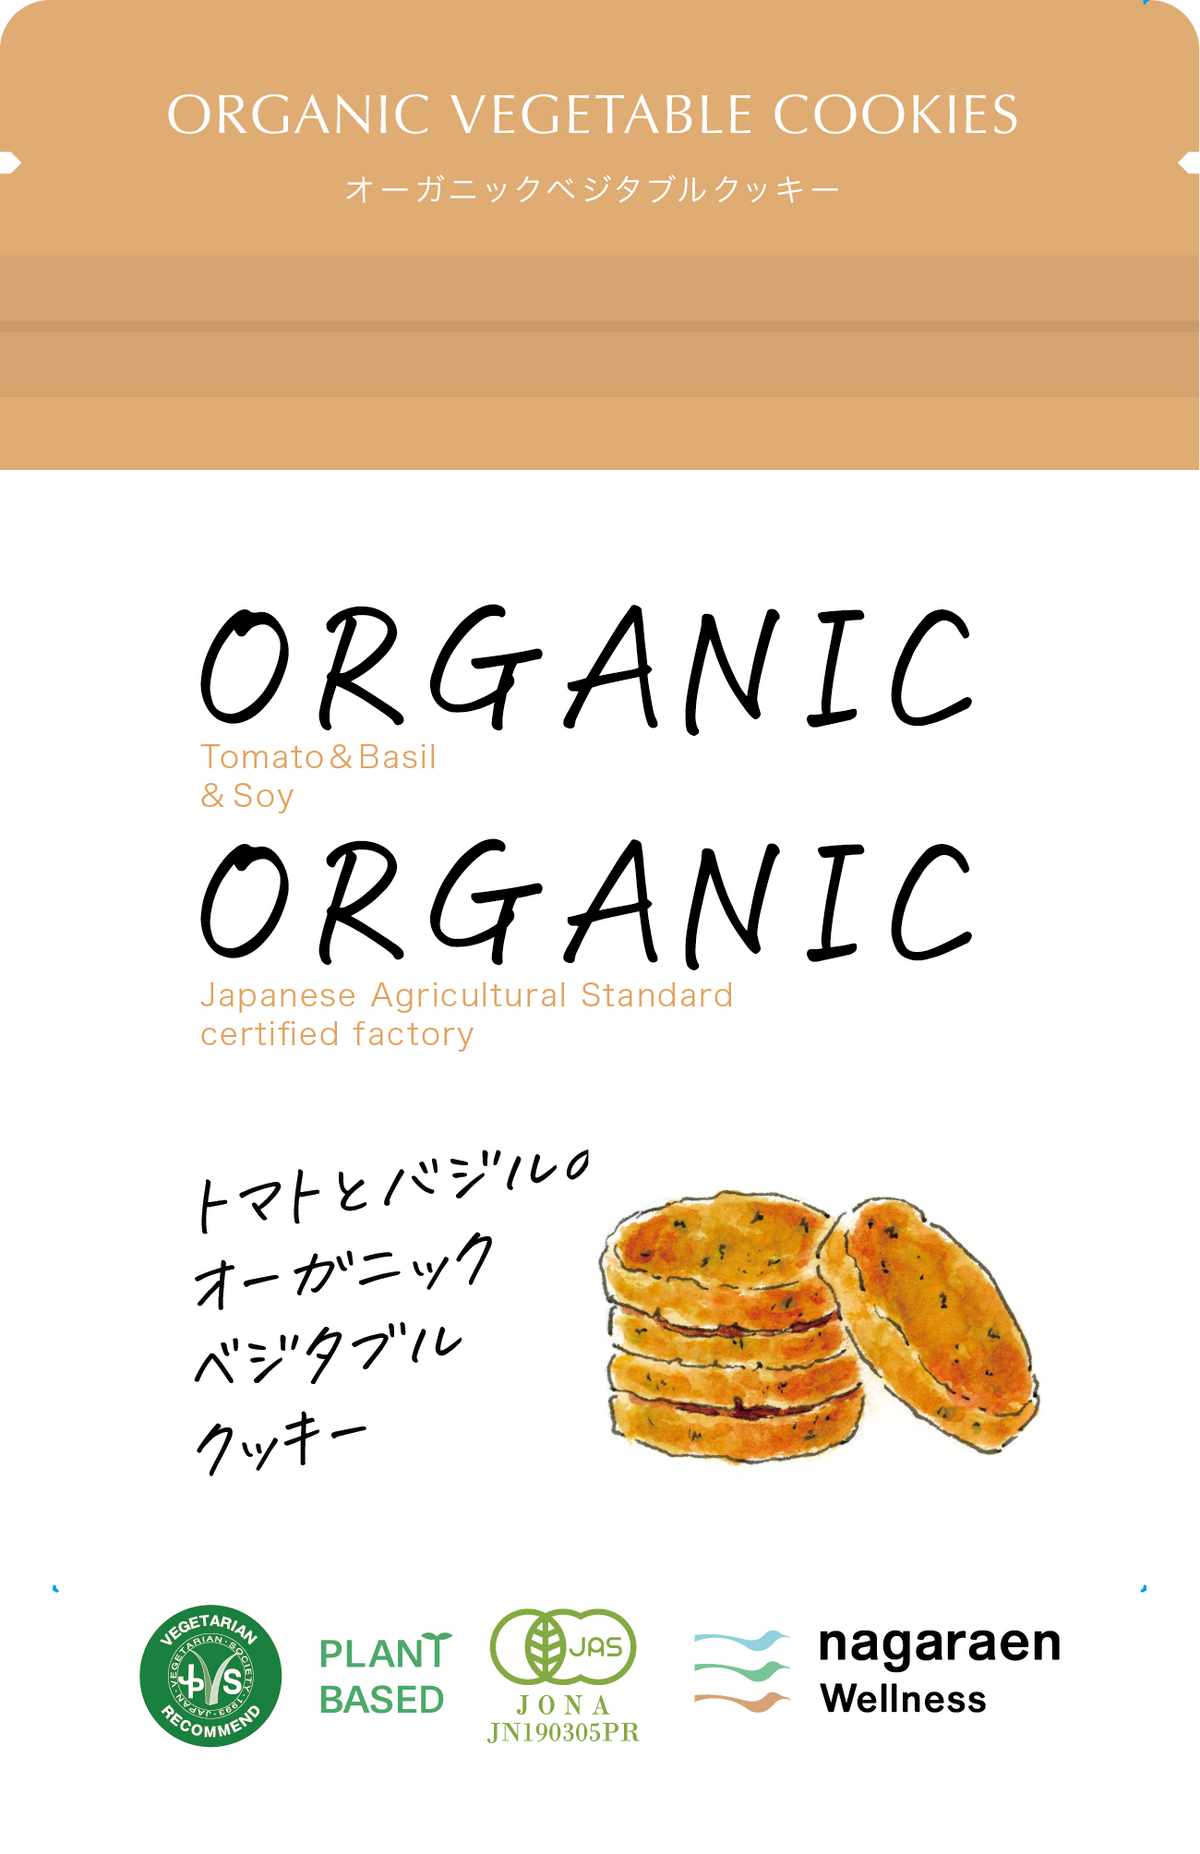 Organic tomato and basil cookies